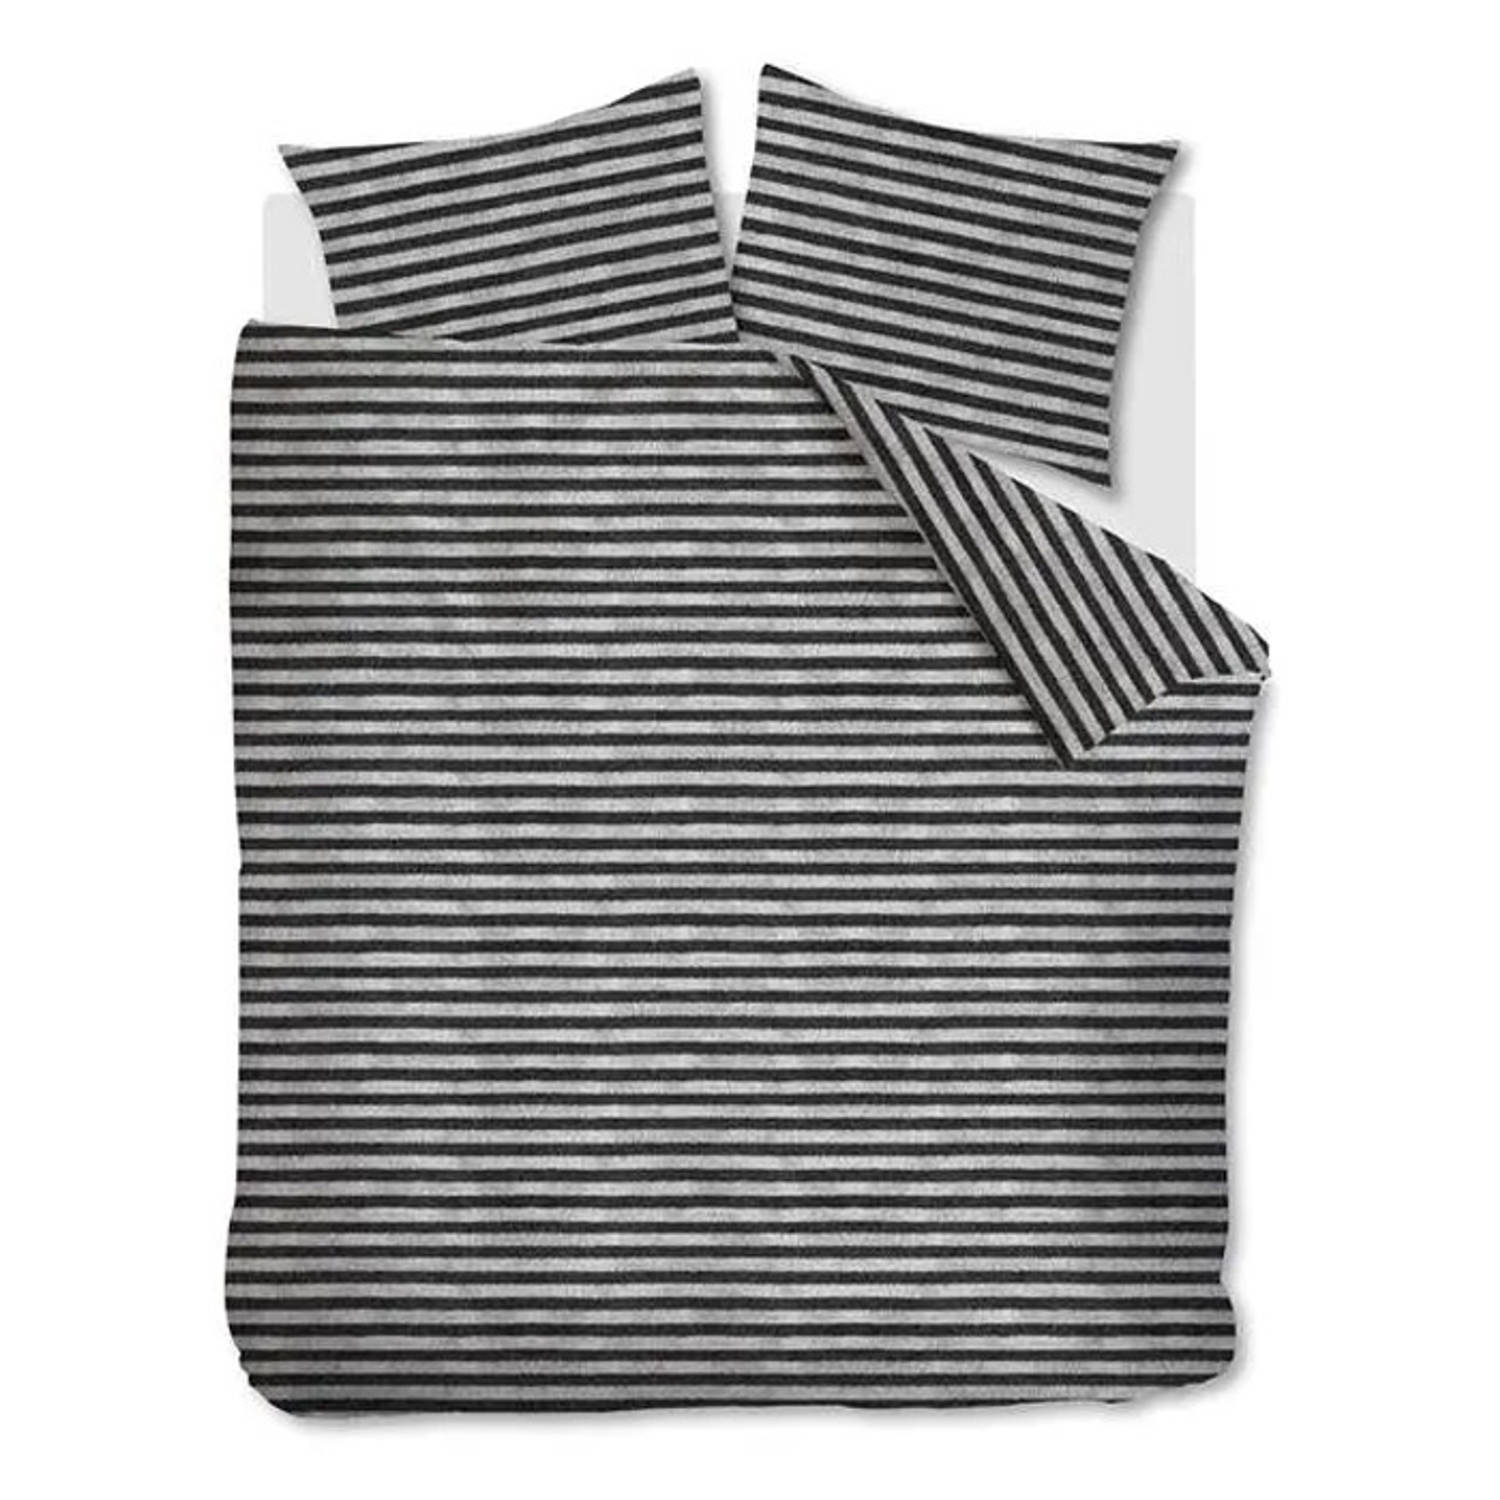 Ariadne at Home Knit Stripes Dekbedovertrek 240 x 200-220 cm Zwart-Wit